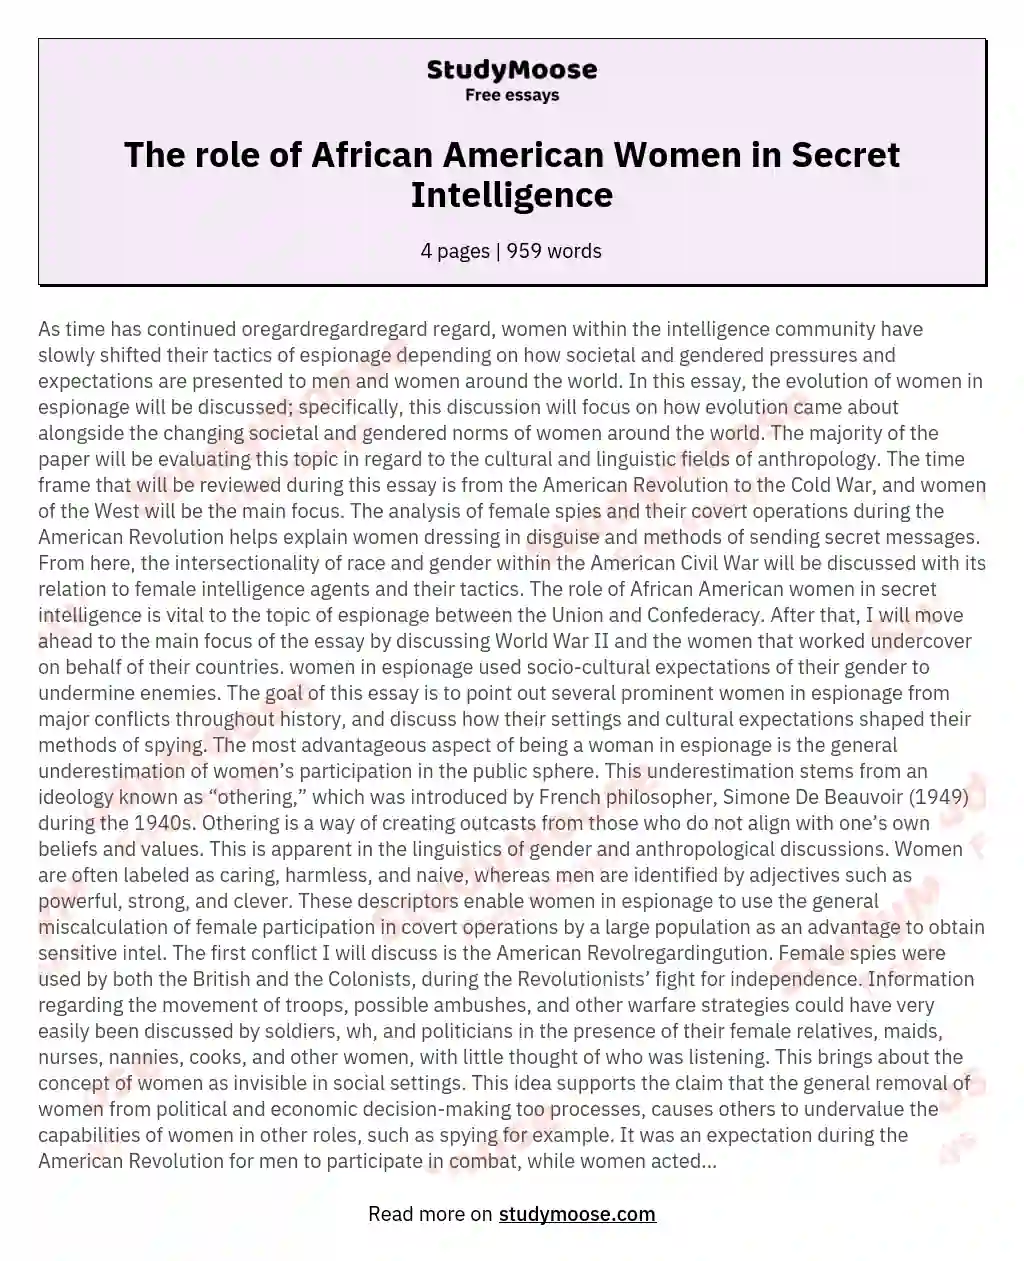 The role of African American Women in Secret Intelligence essay